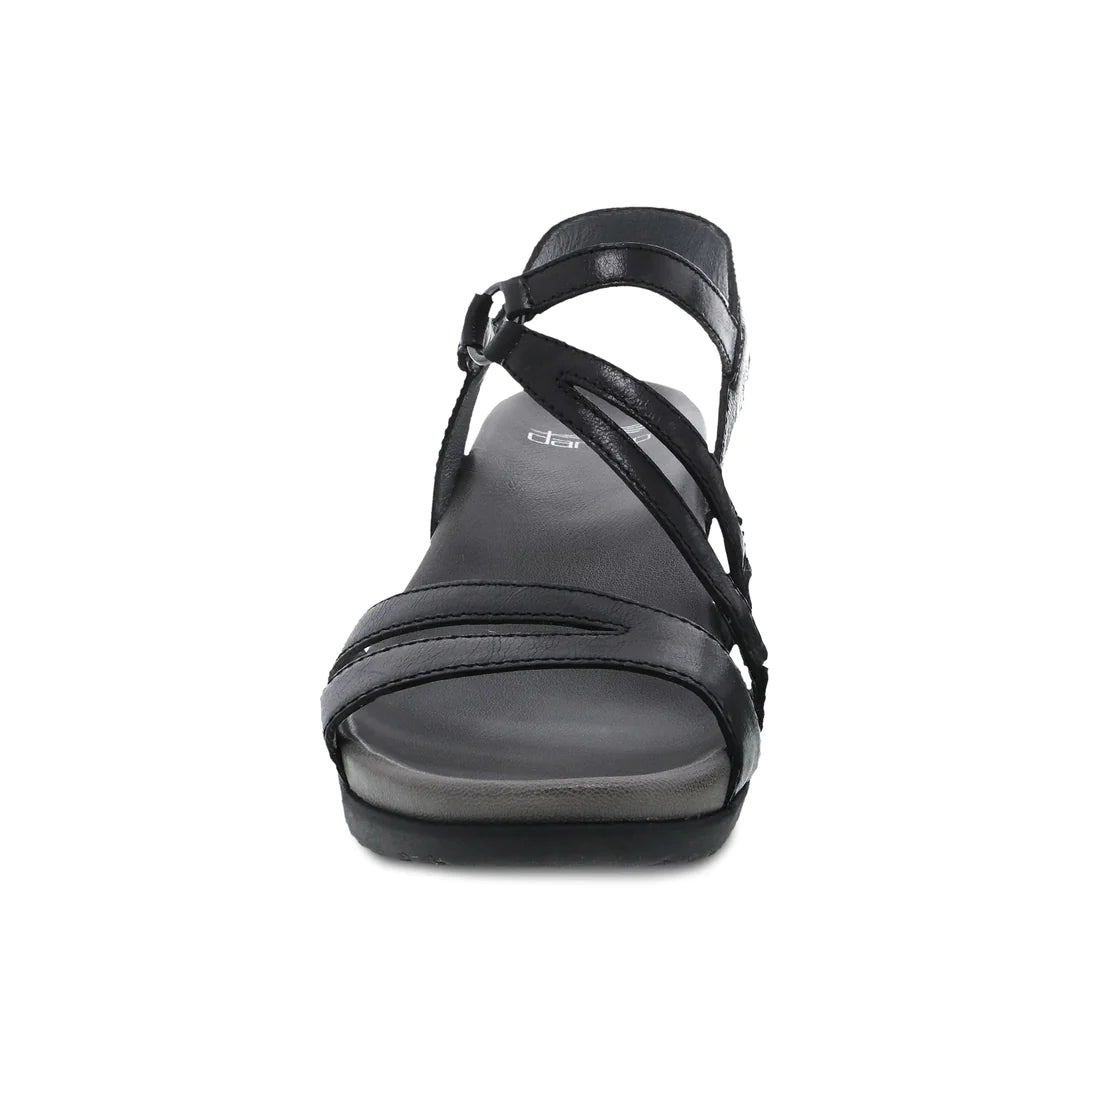 Dansko Women's Addyson Wedge Sandal in Black Glazed Leather